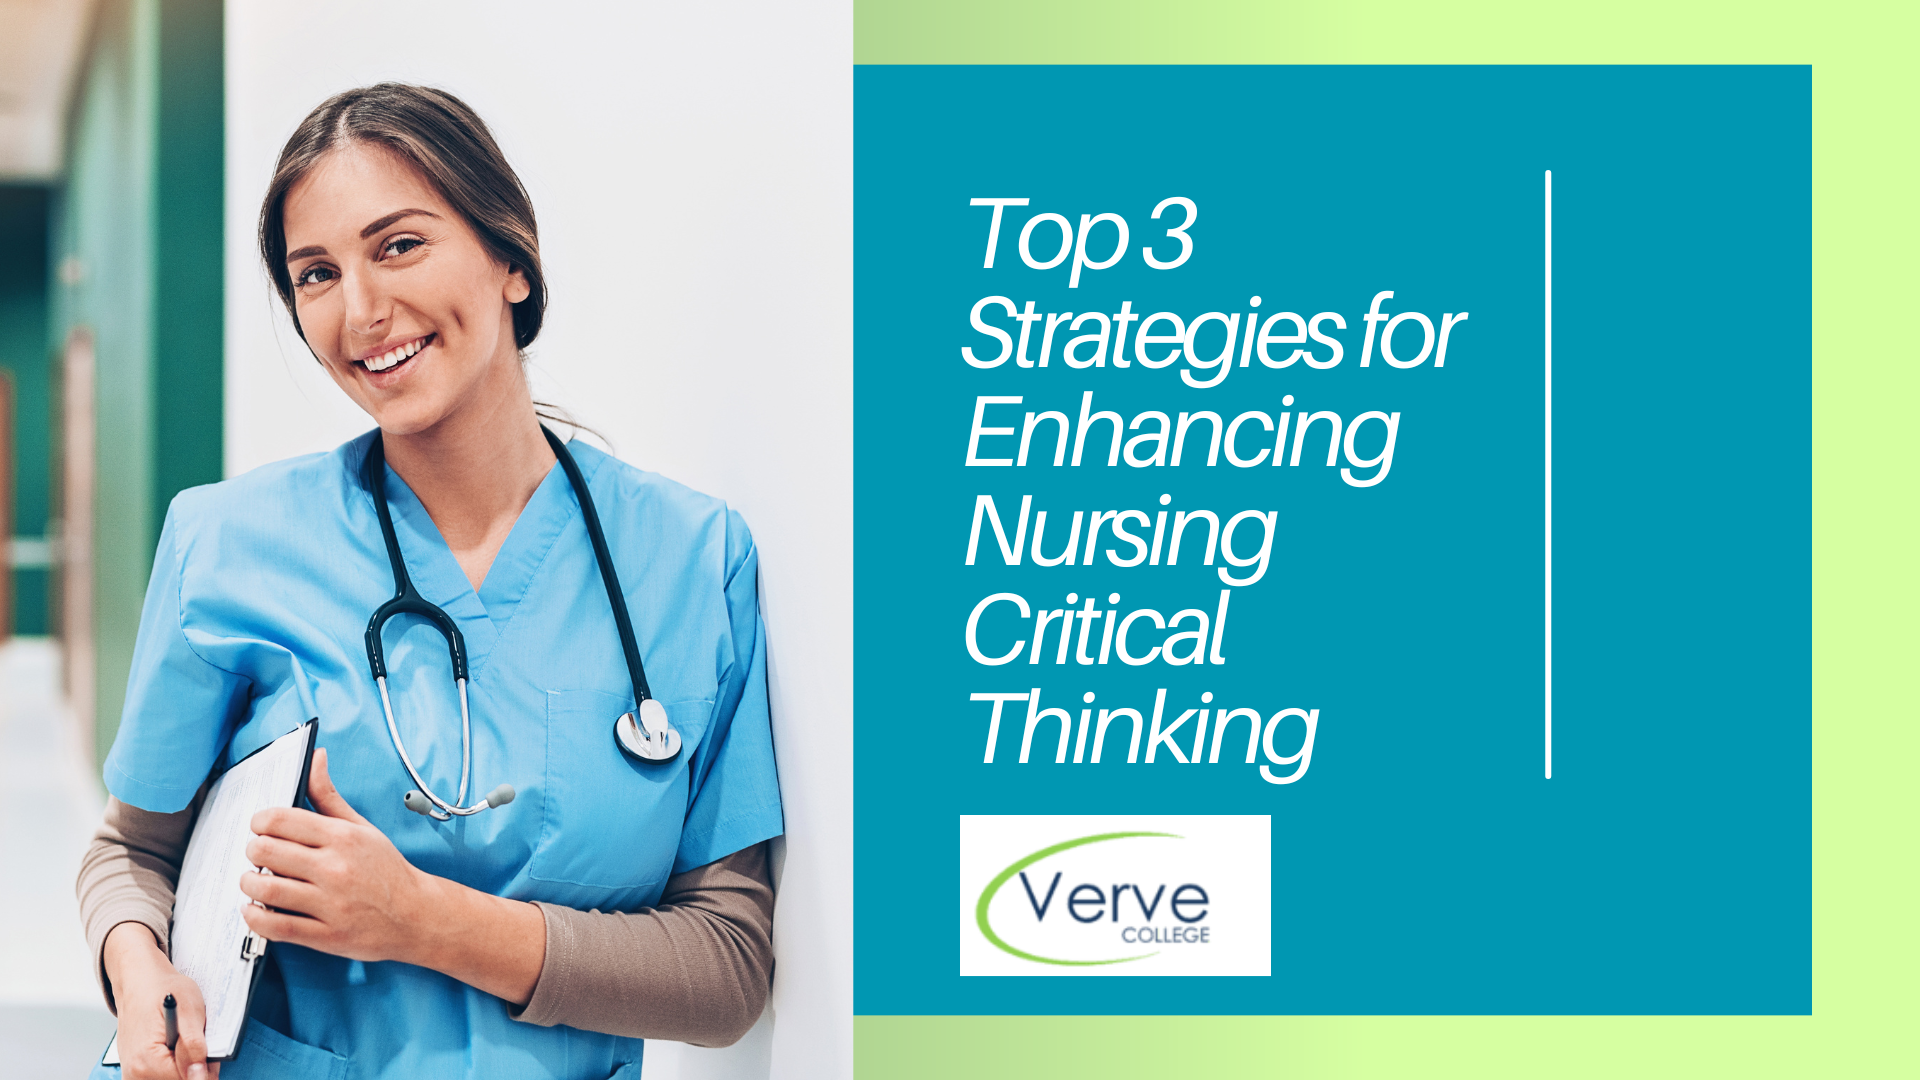 Top 3 Strategies for Enhancing Nursing Critical Thinking